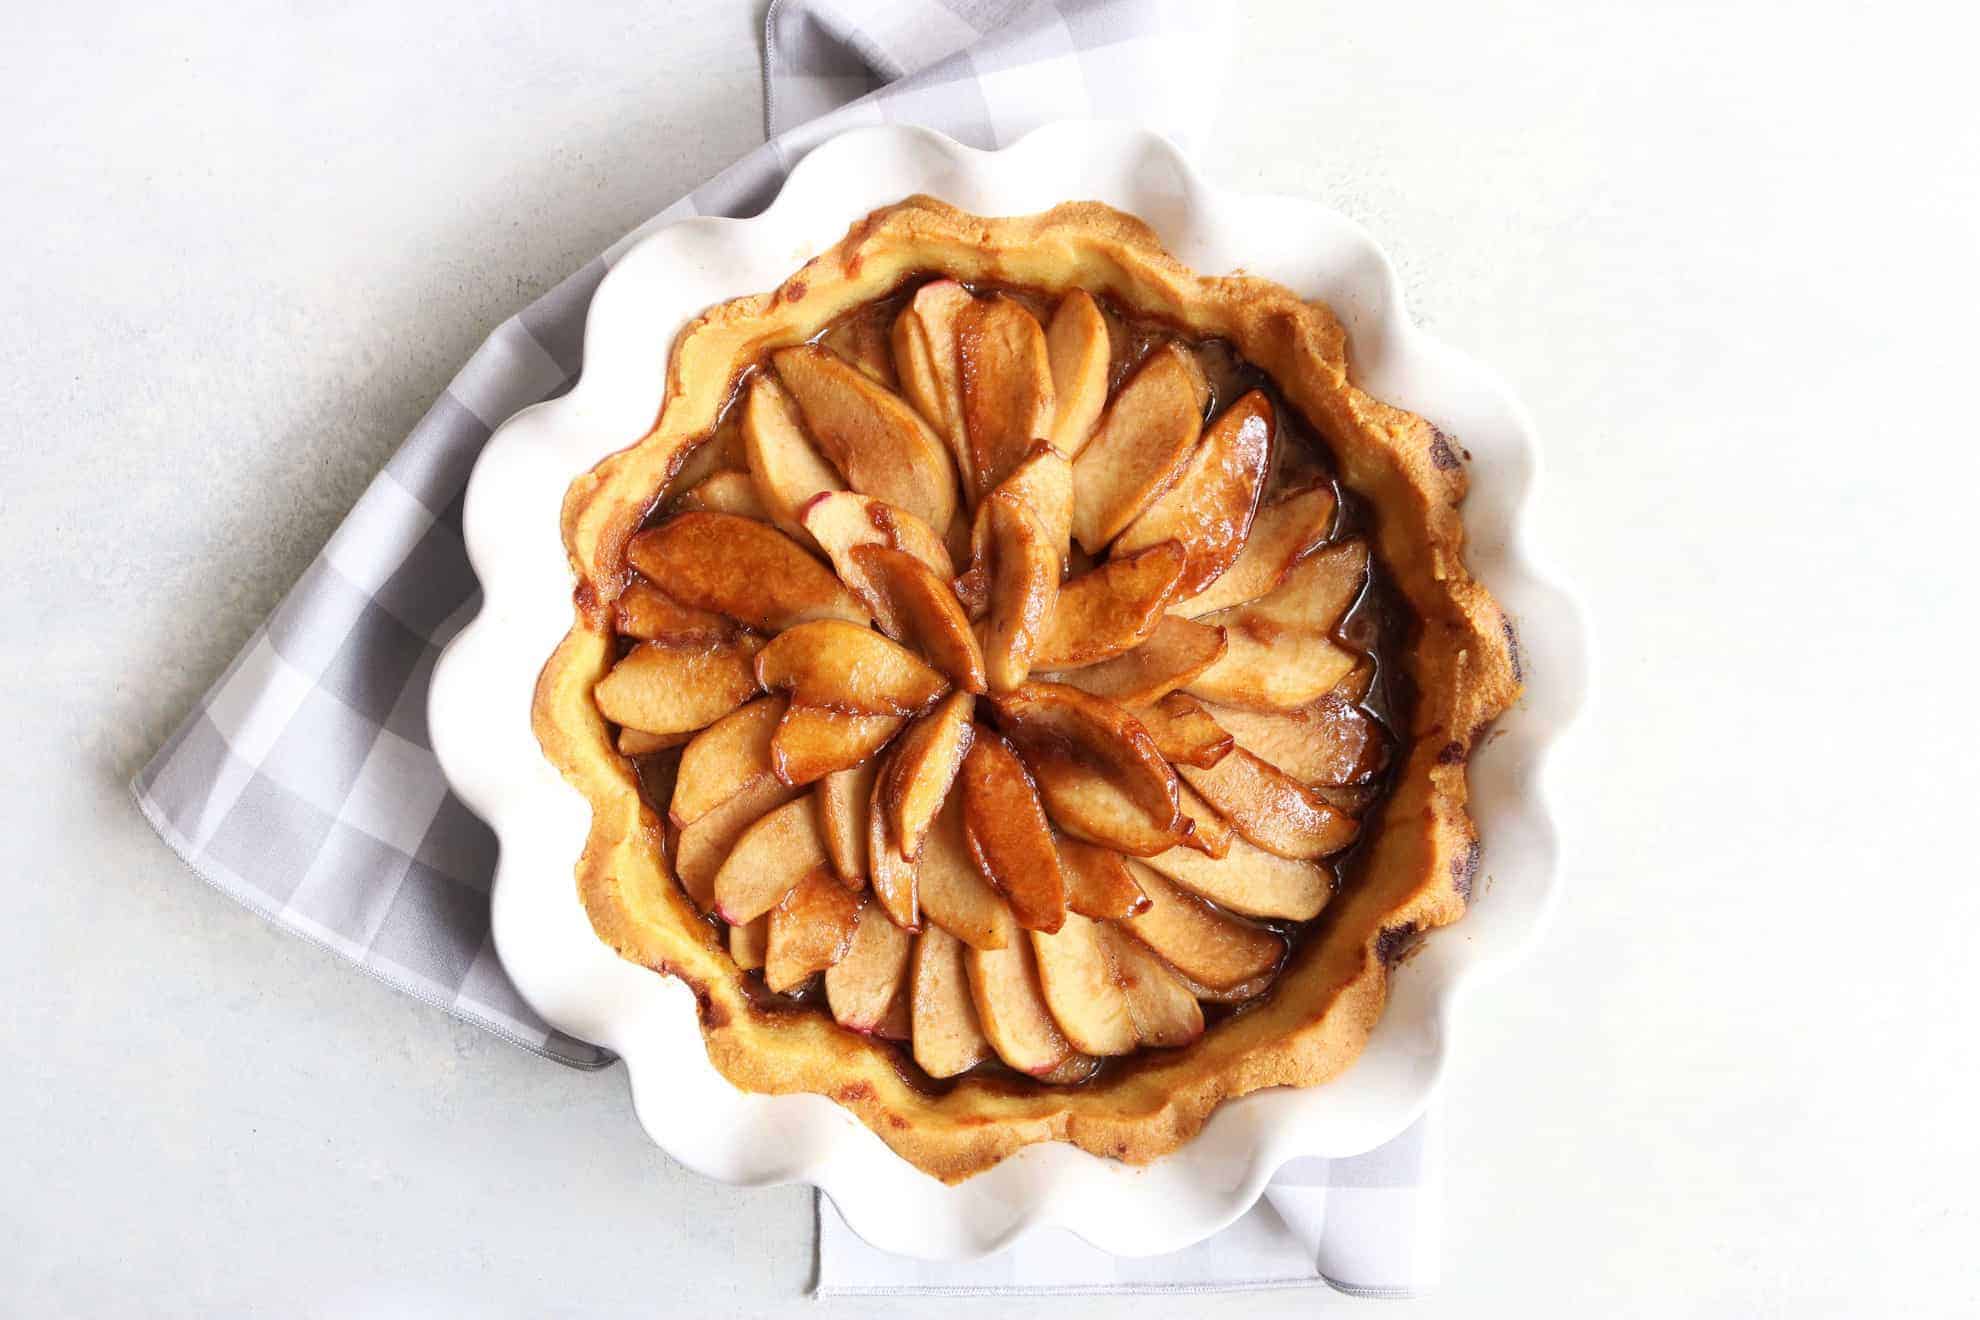 Caramel Apple Pie - The Toasted Pine Nut